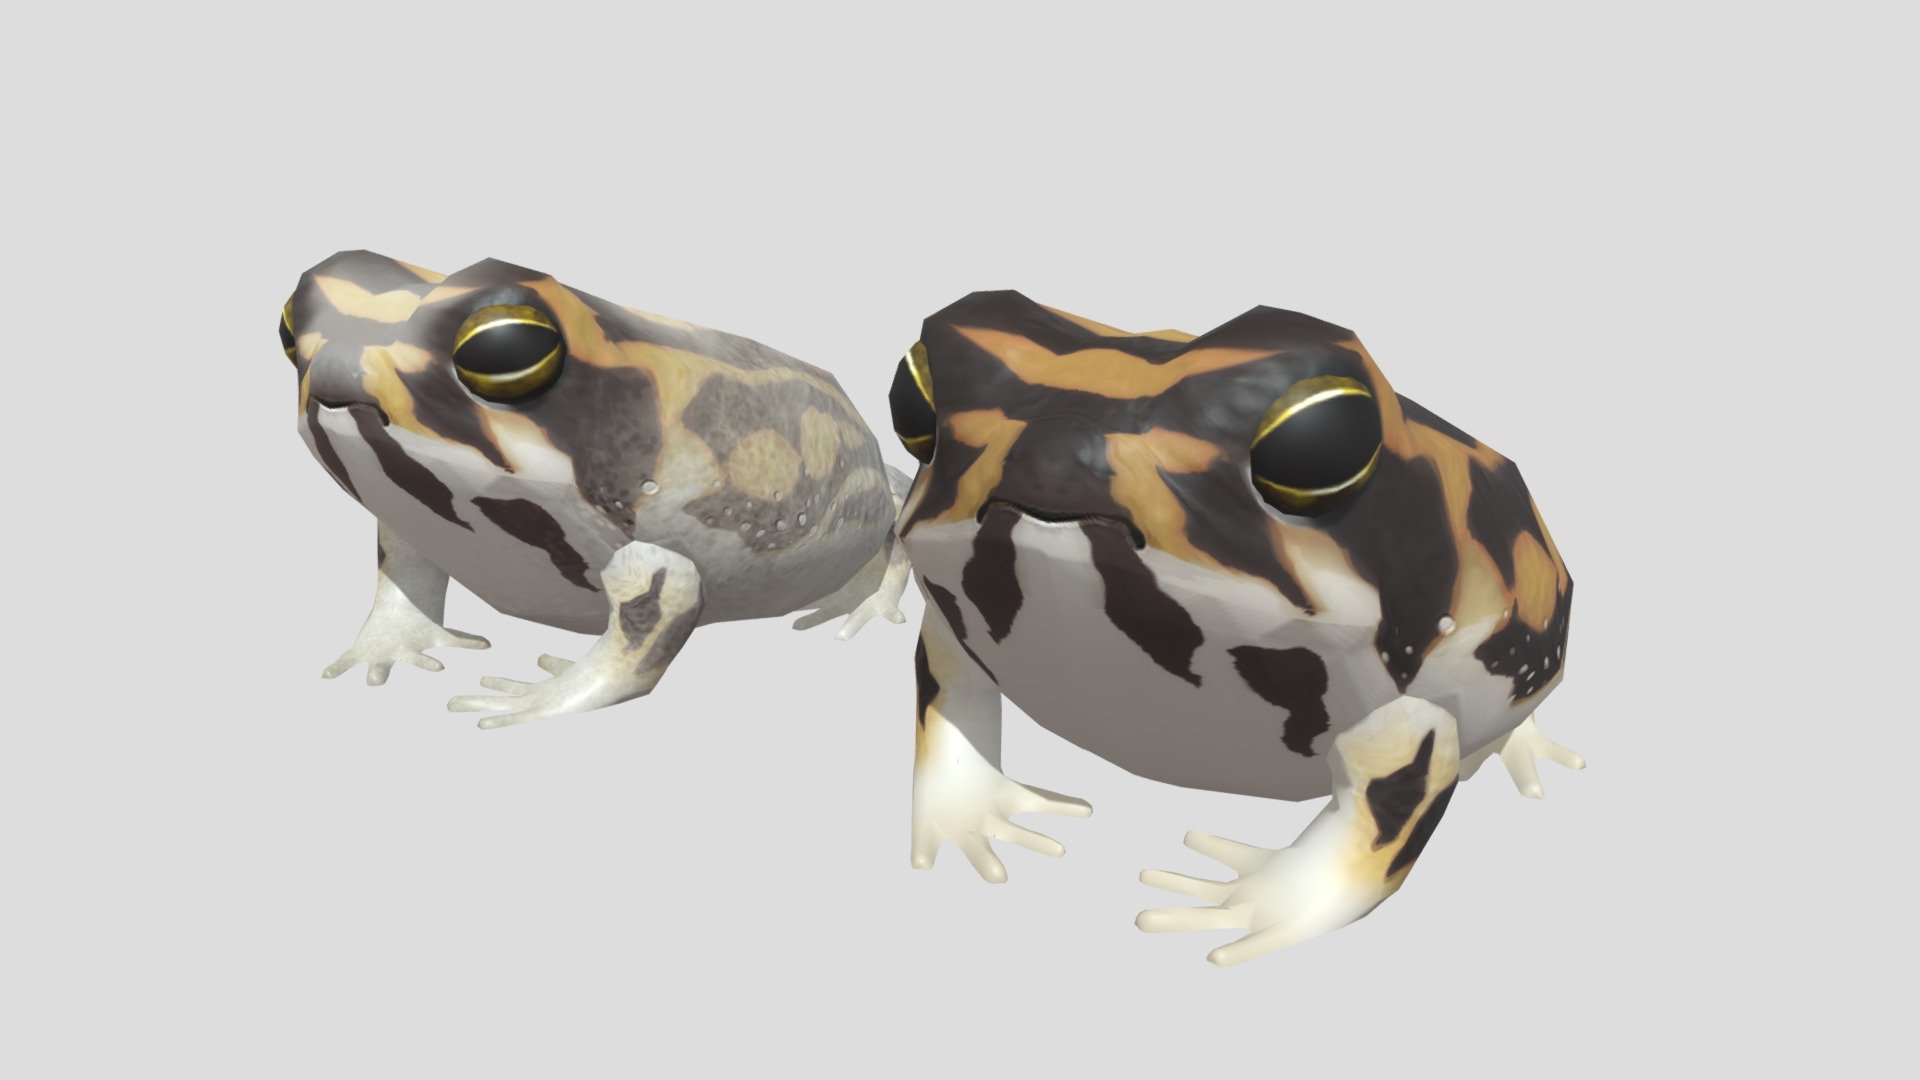 common rain frog
アメフクラガエル - common rain frog アメフクラガエル - 3D model by Mozukui (@redfrogman) 3d model